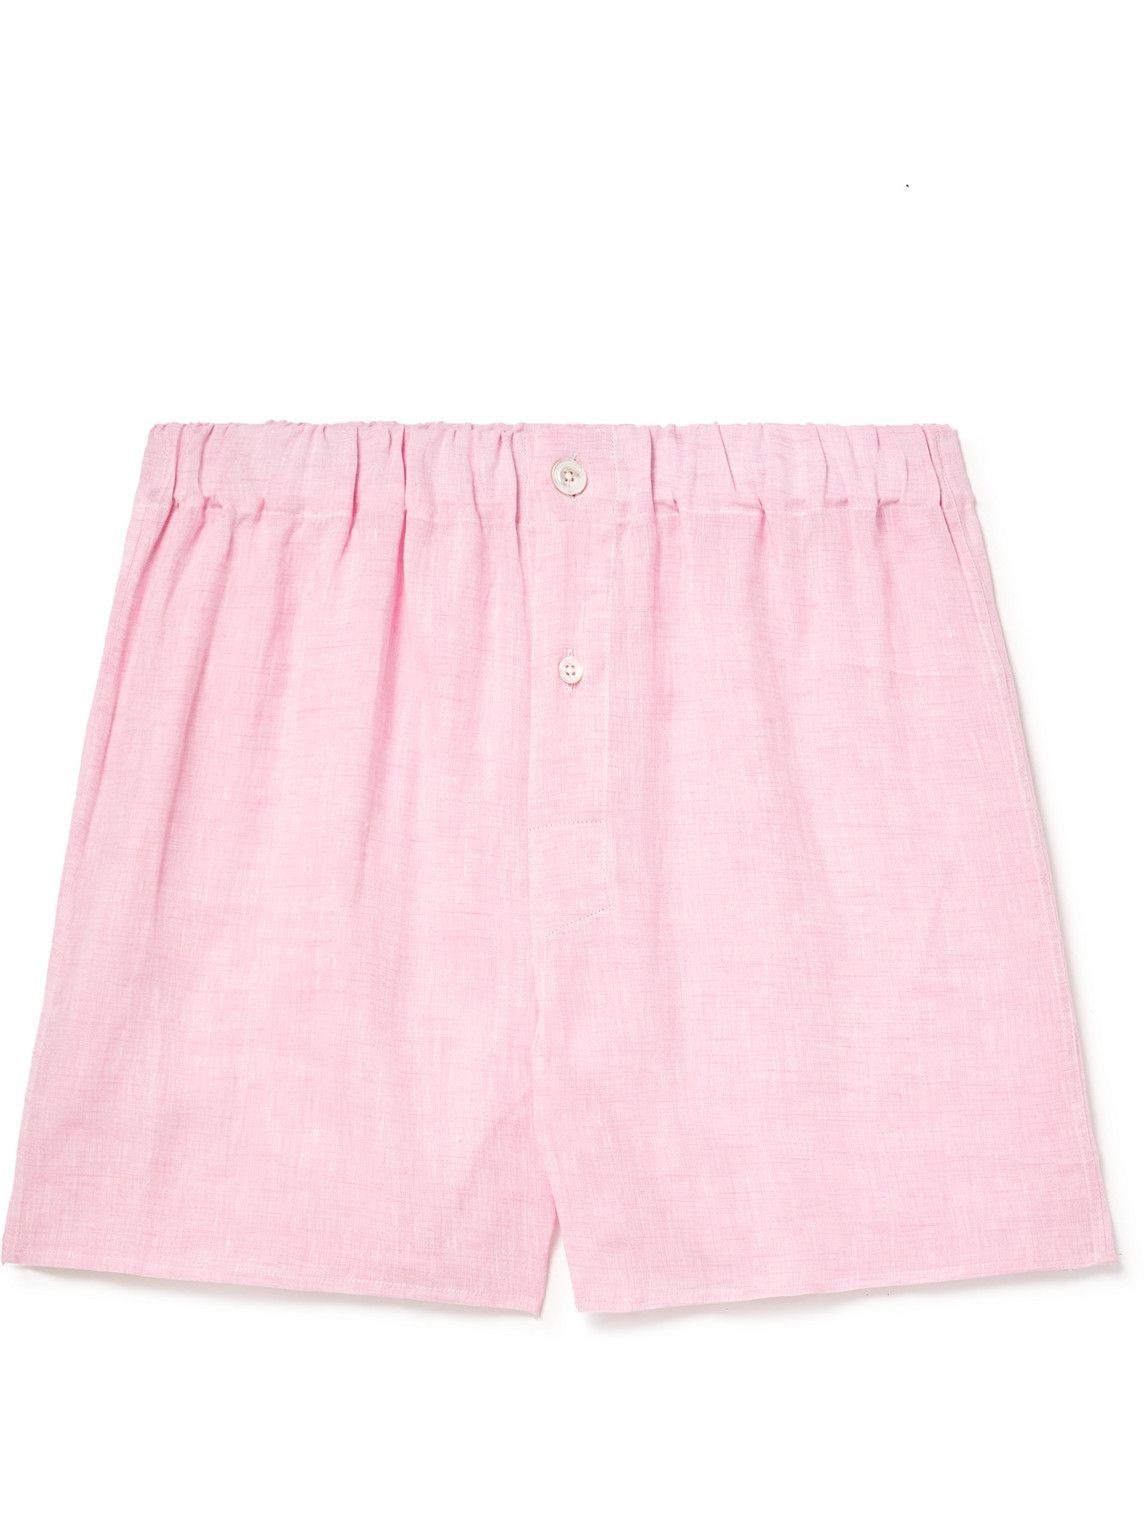 Photo: Emma Willis - Linen Boxer Shorts - Pink